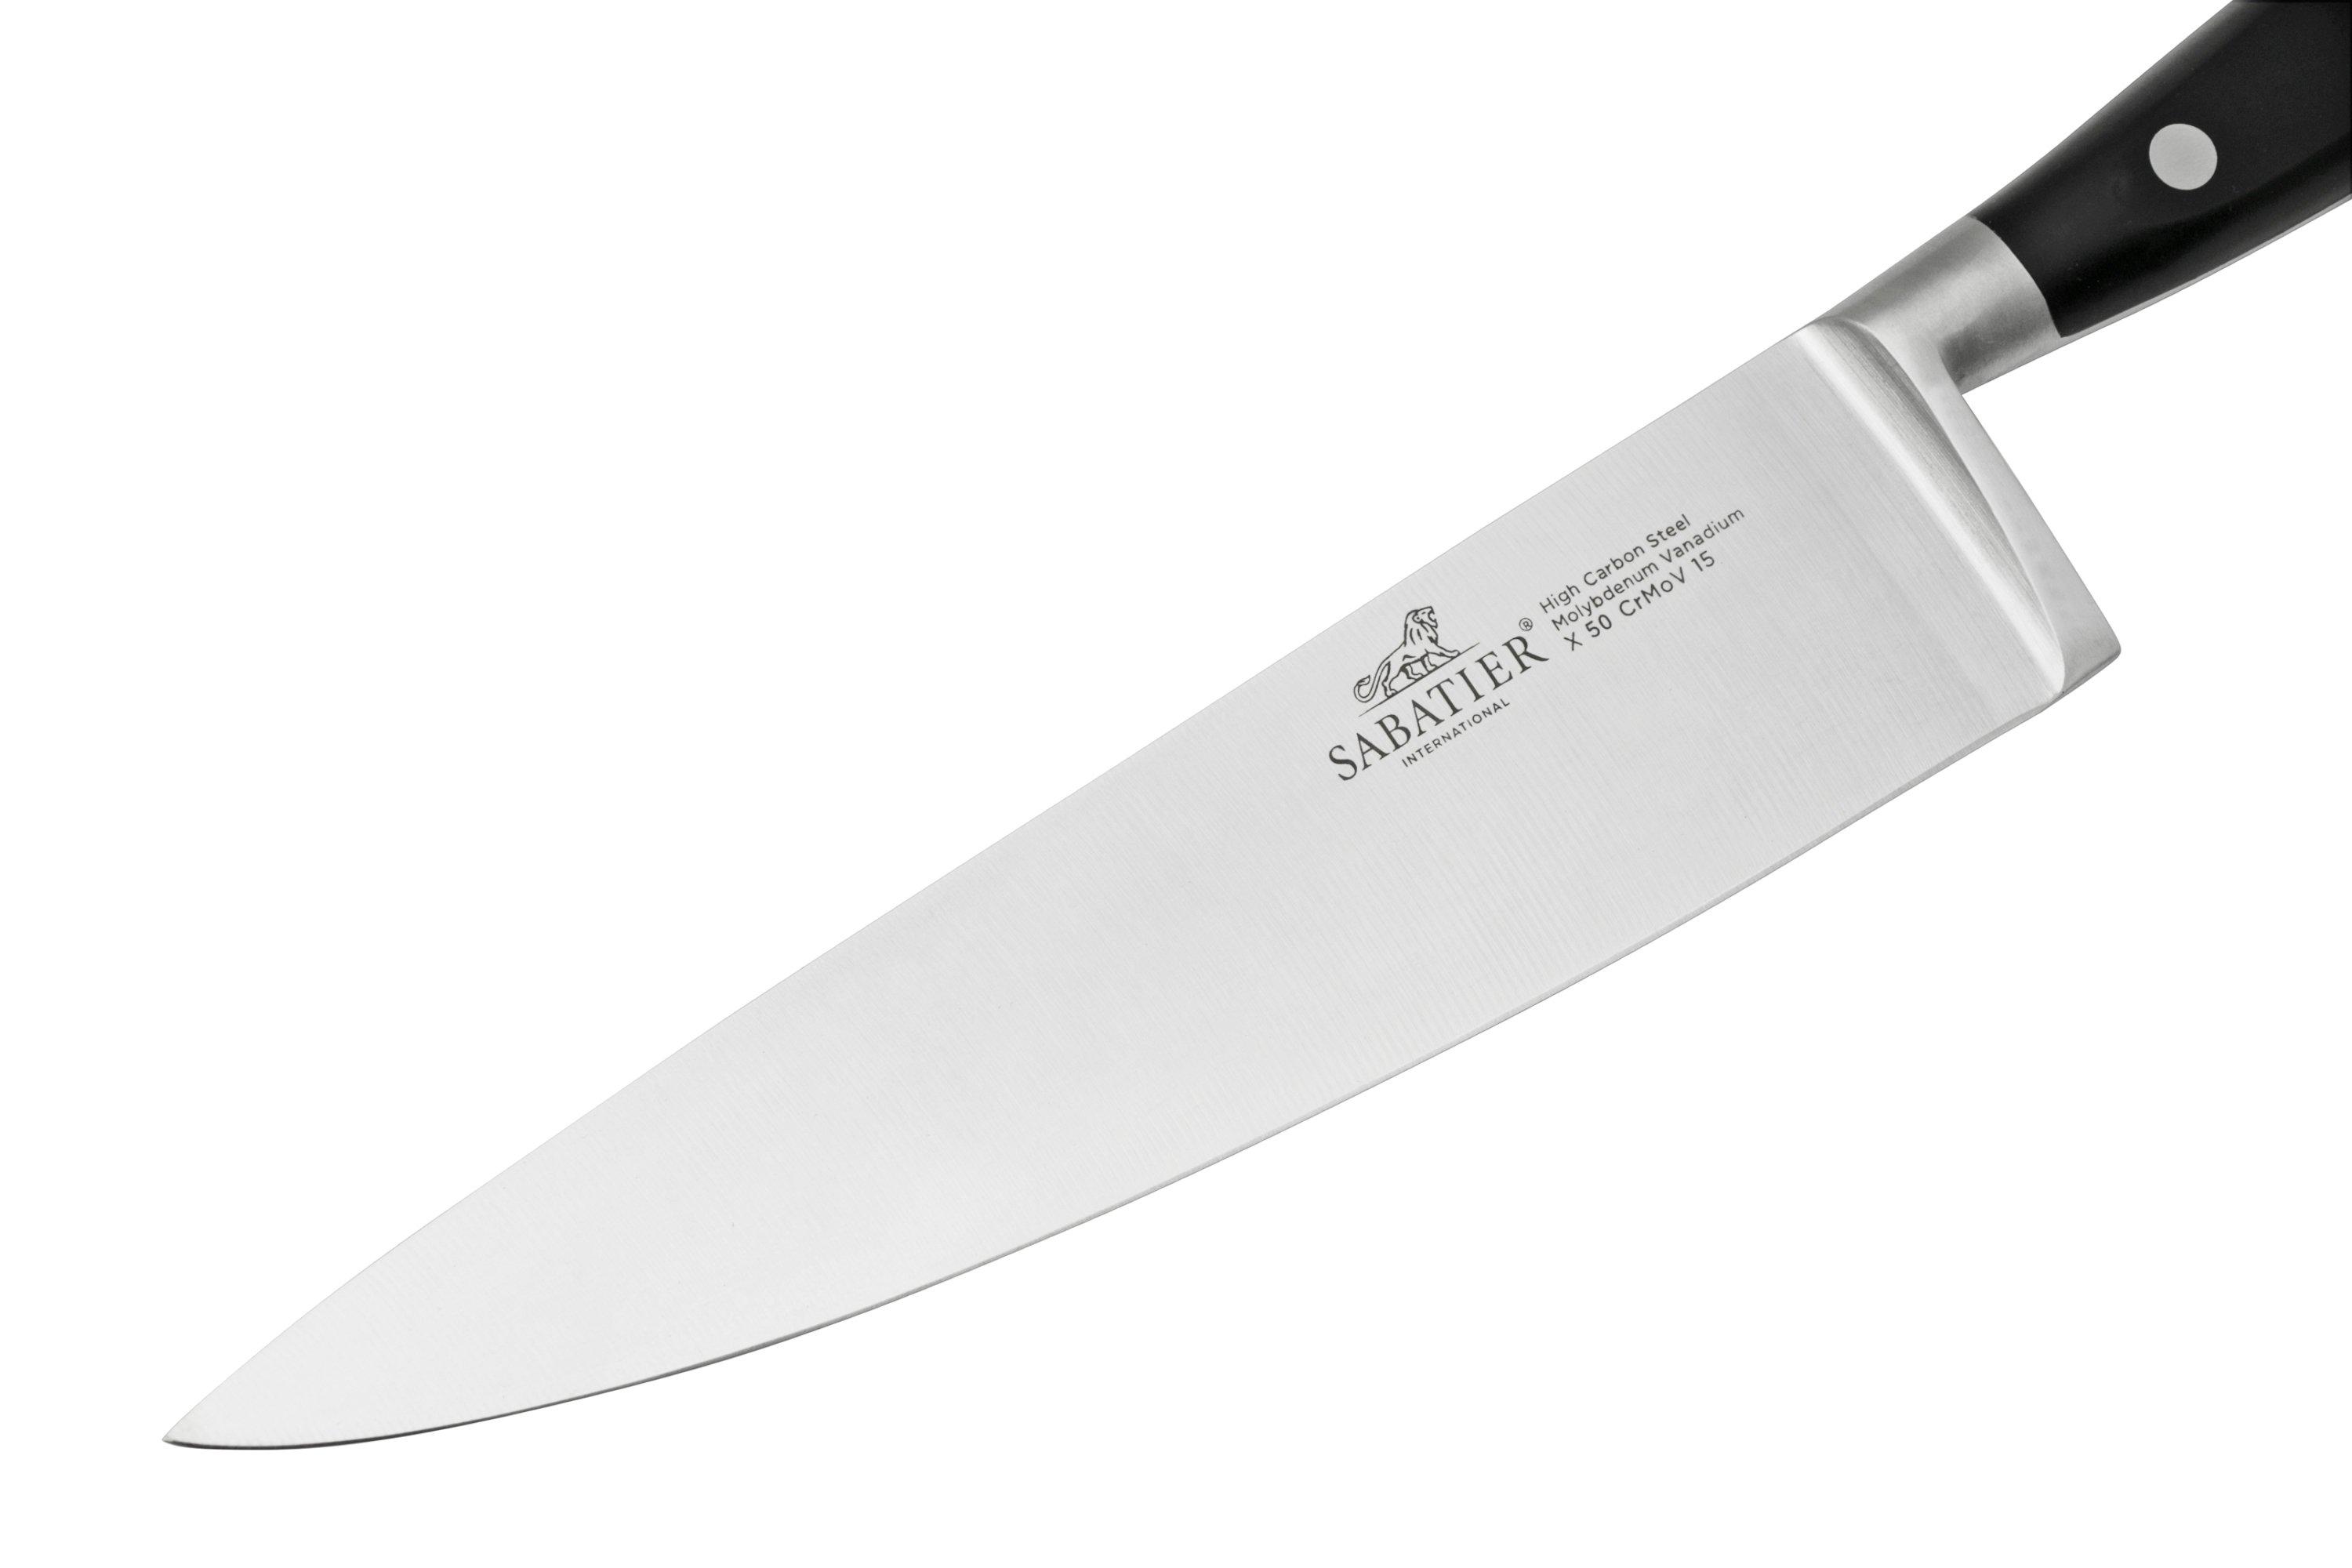 Lion Sabatier International Ysis 910284, 3-piece knife set